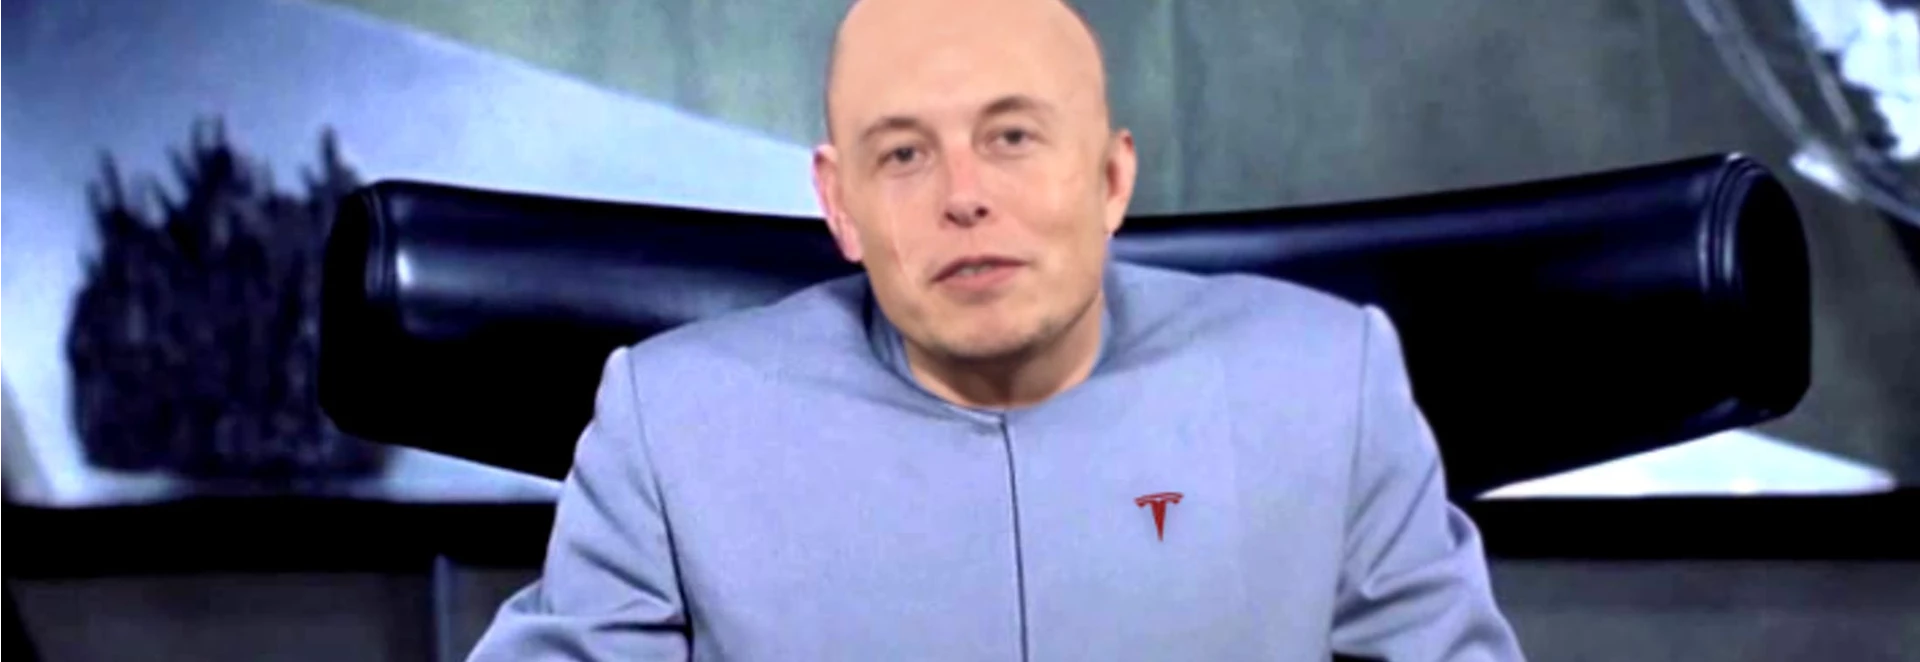 Definitive proof that Tesla CEO Elon Musk is a supervillain